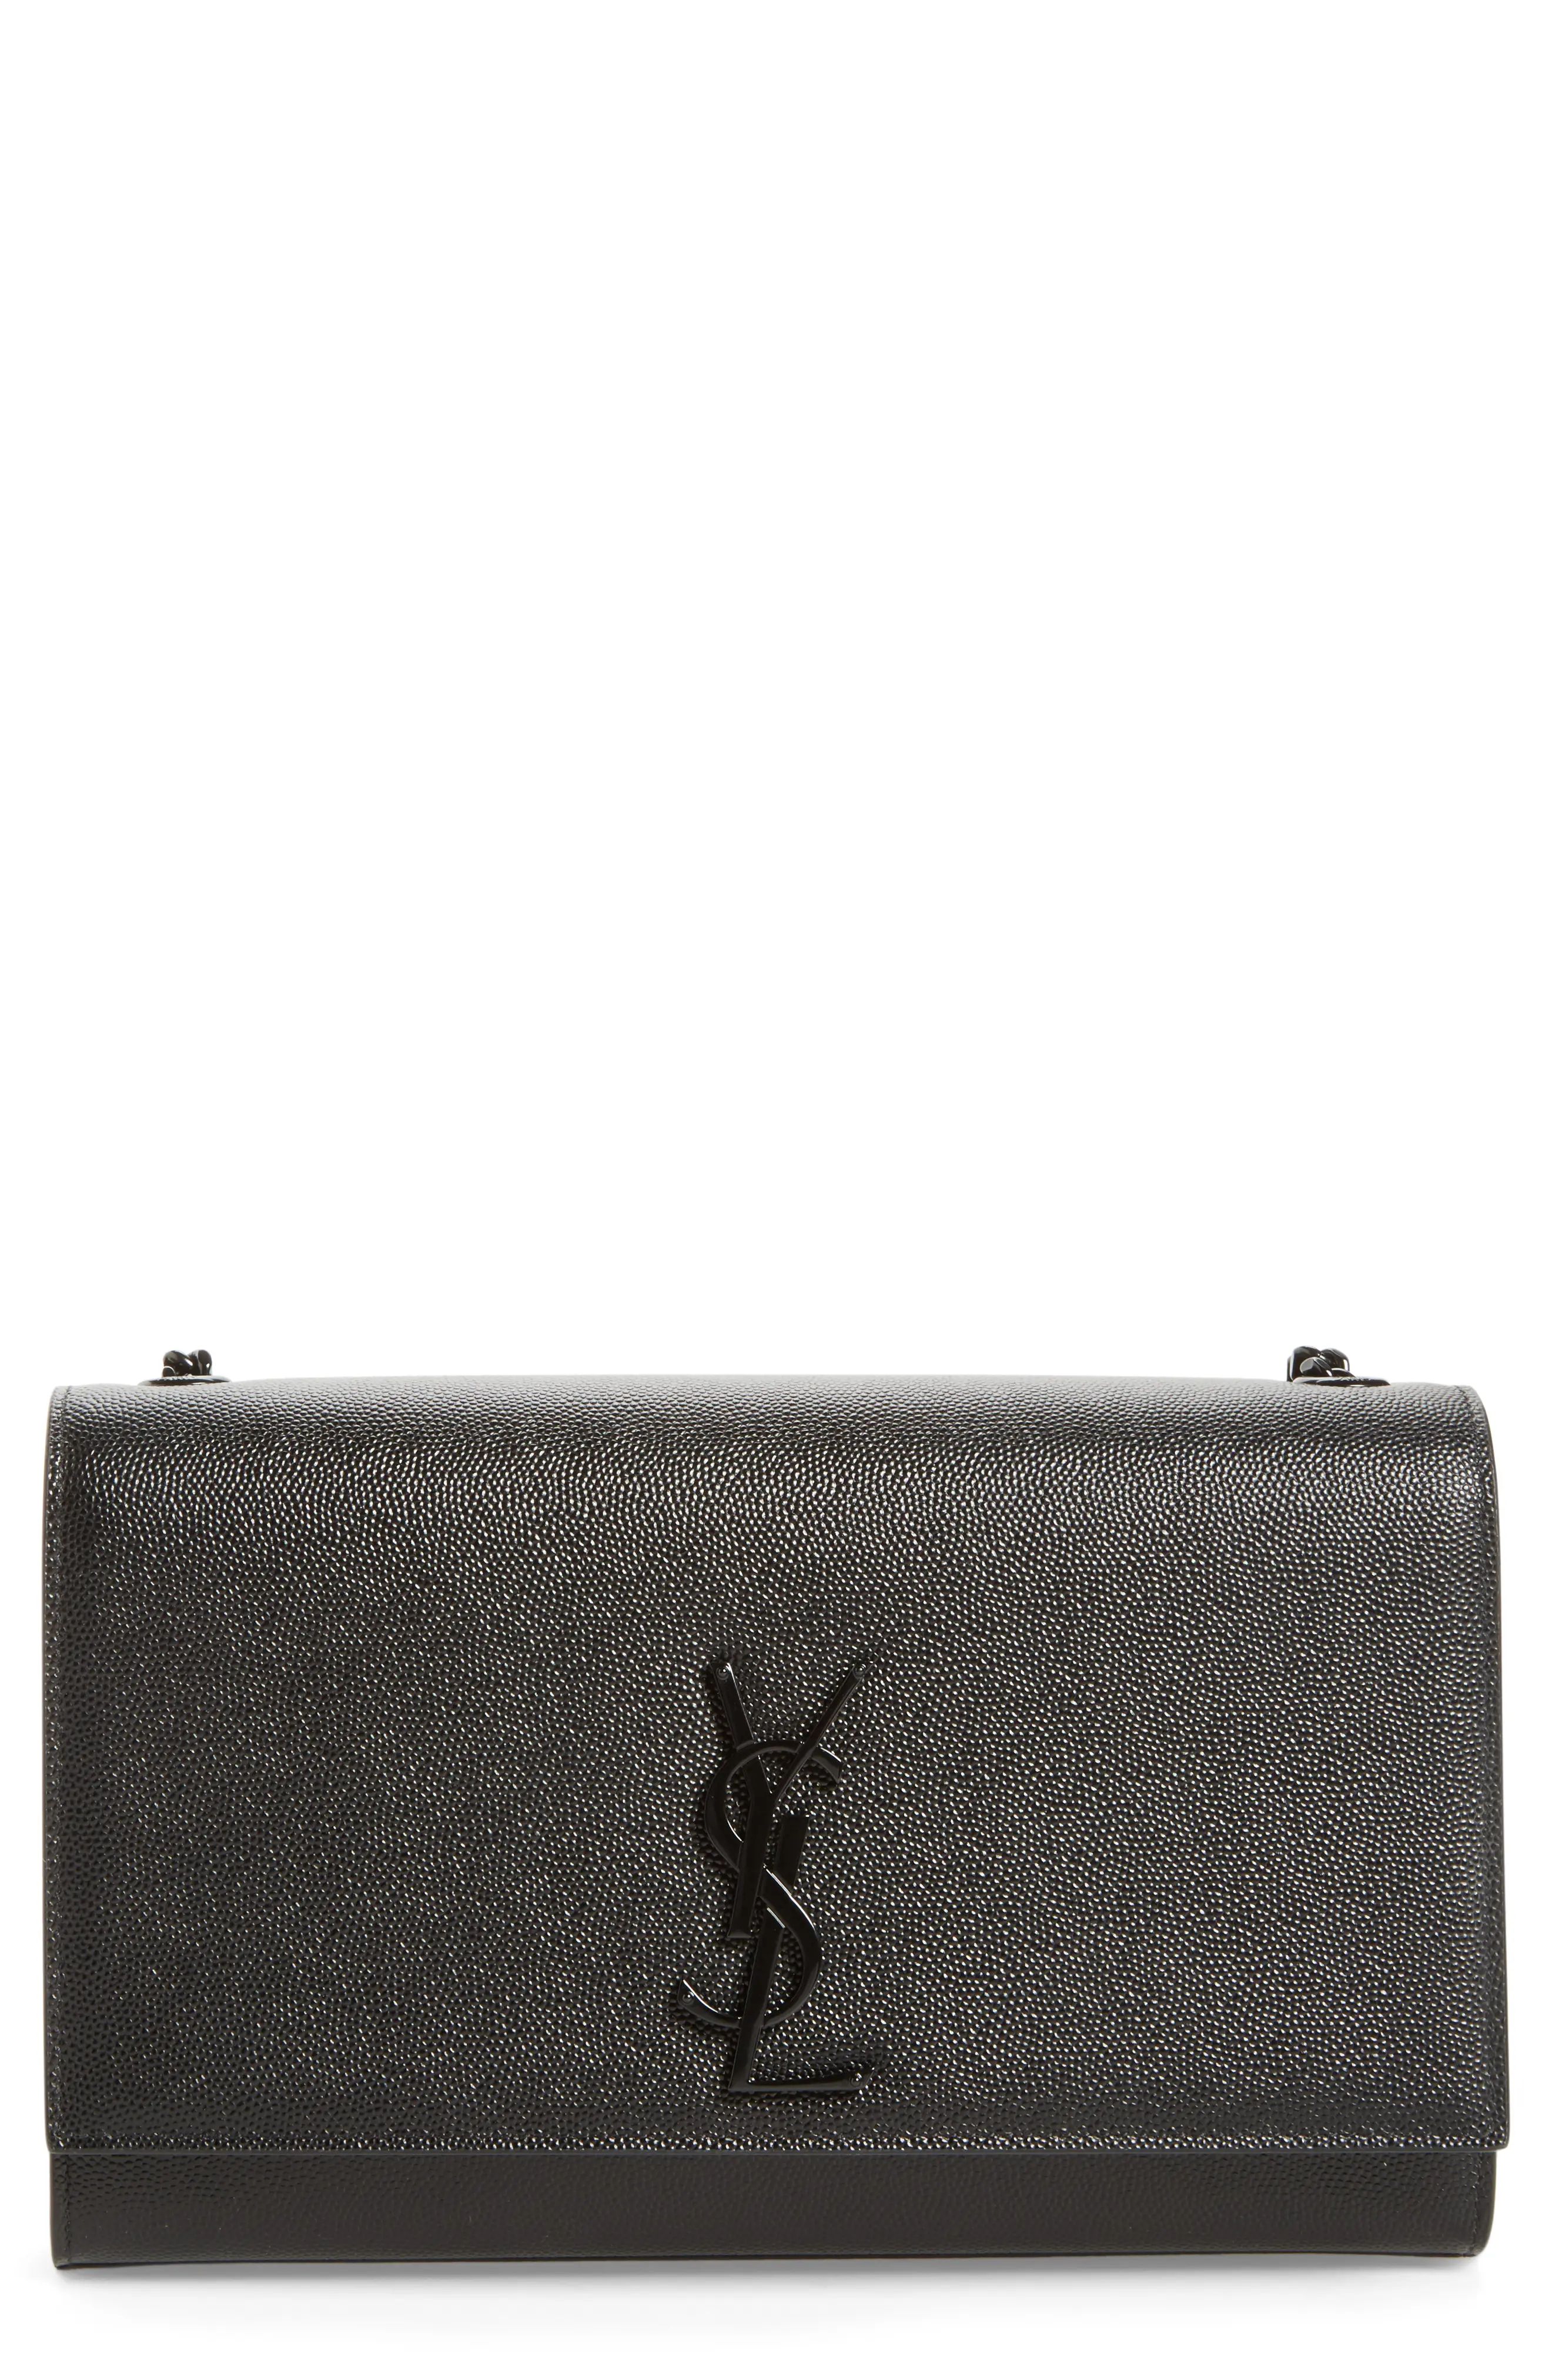 Saint Laurent Medium Monogram Leather Crossbody Bag | Nordstrom